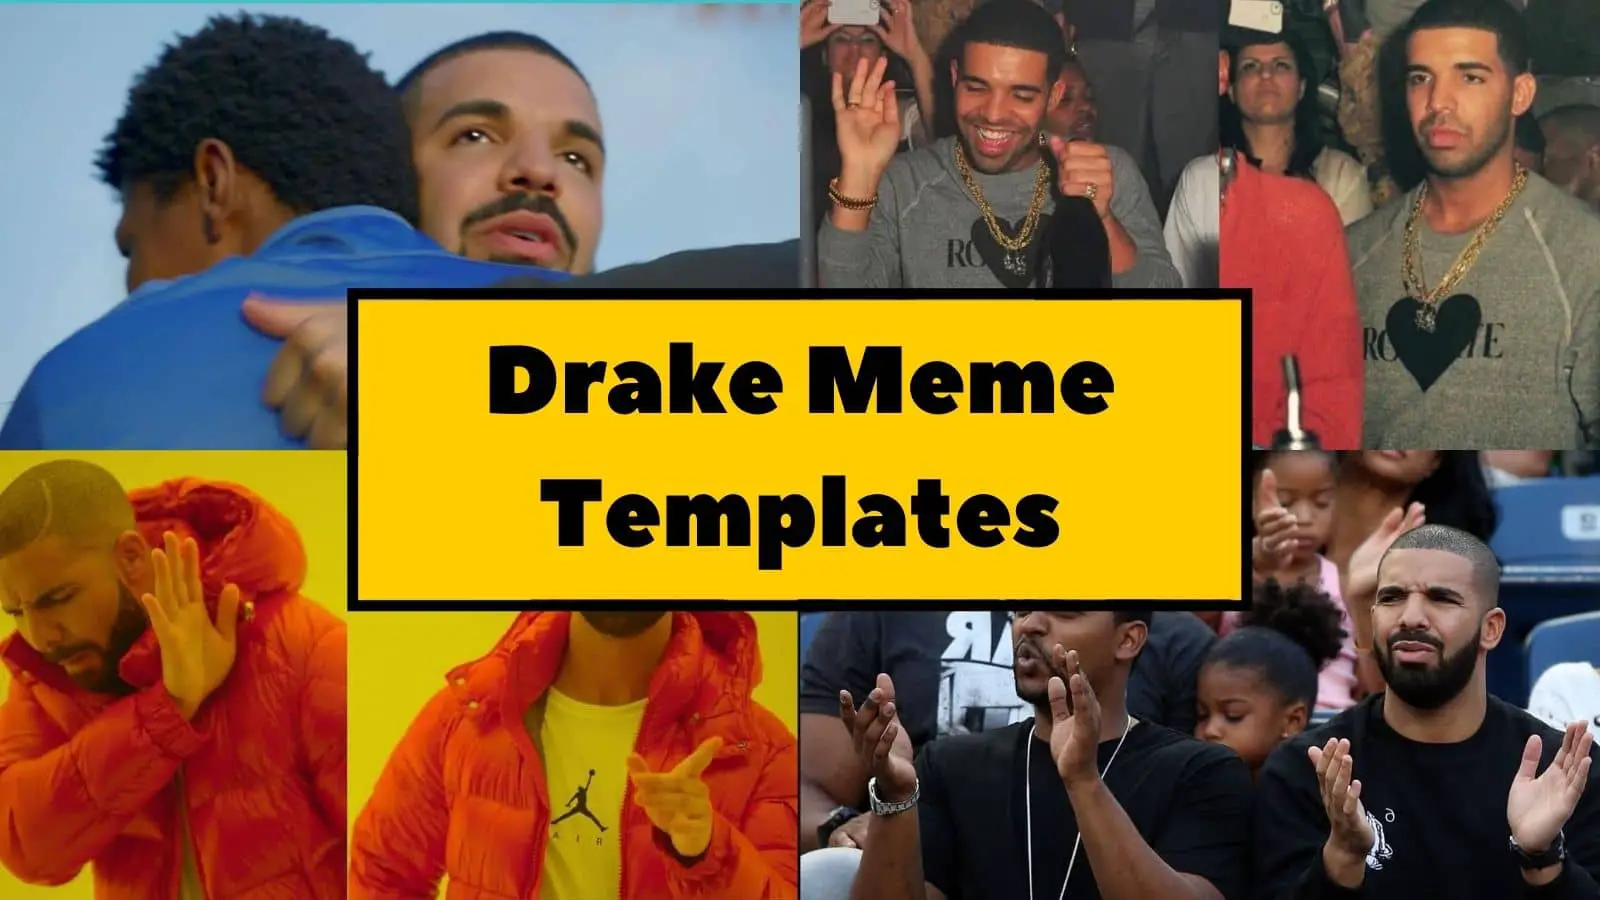 Top 10 Drake Meme Templates Of All-Time - HumorNama